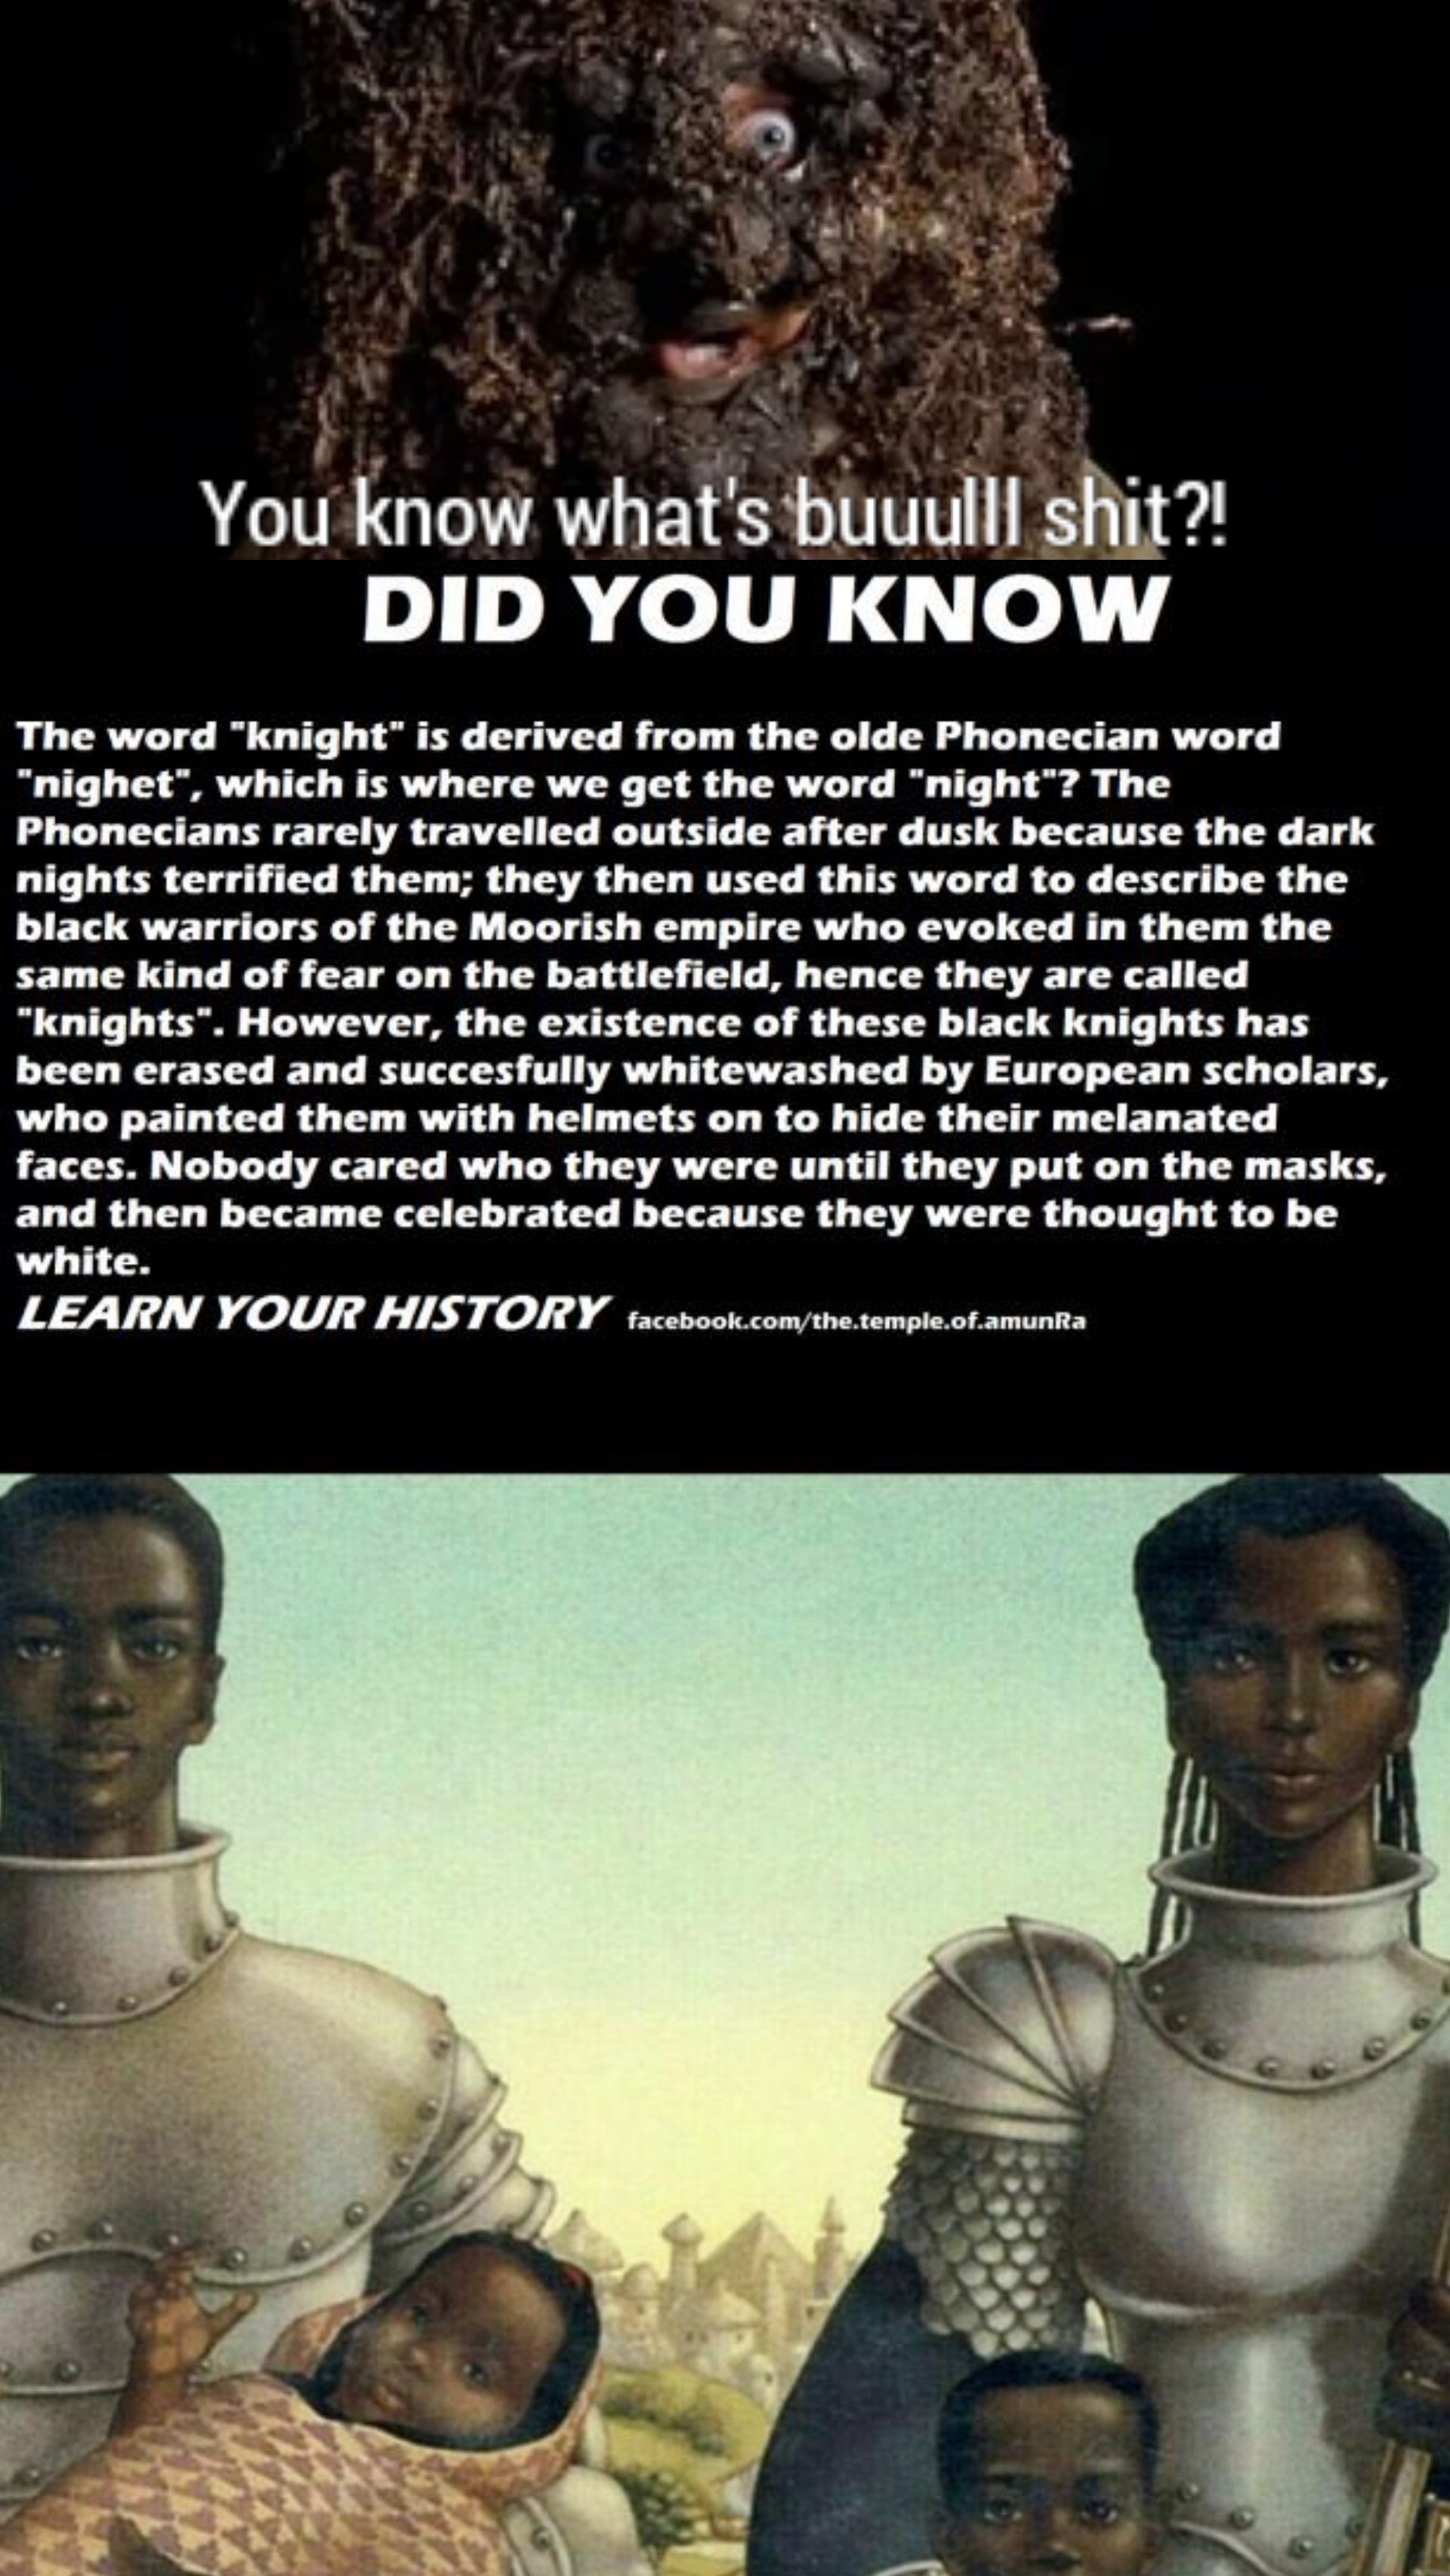 Learn "history"